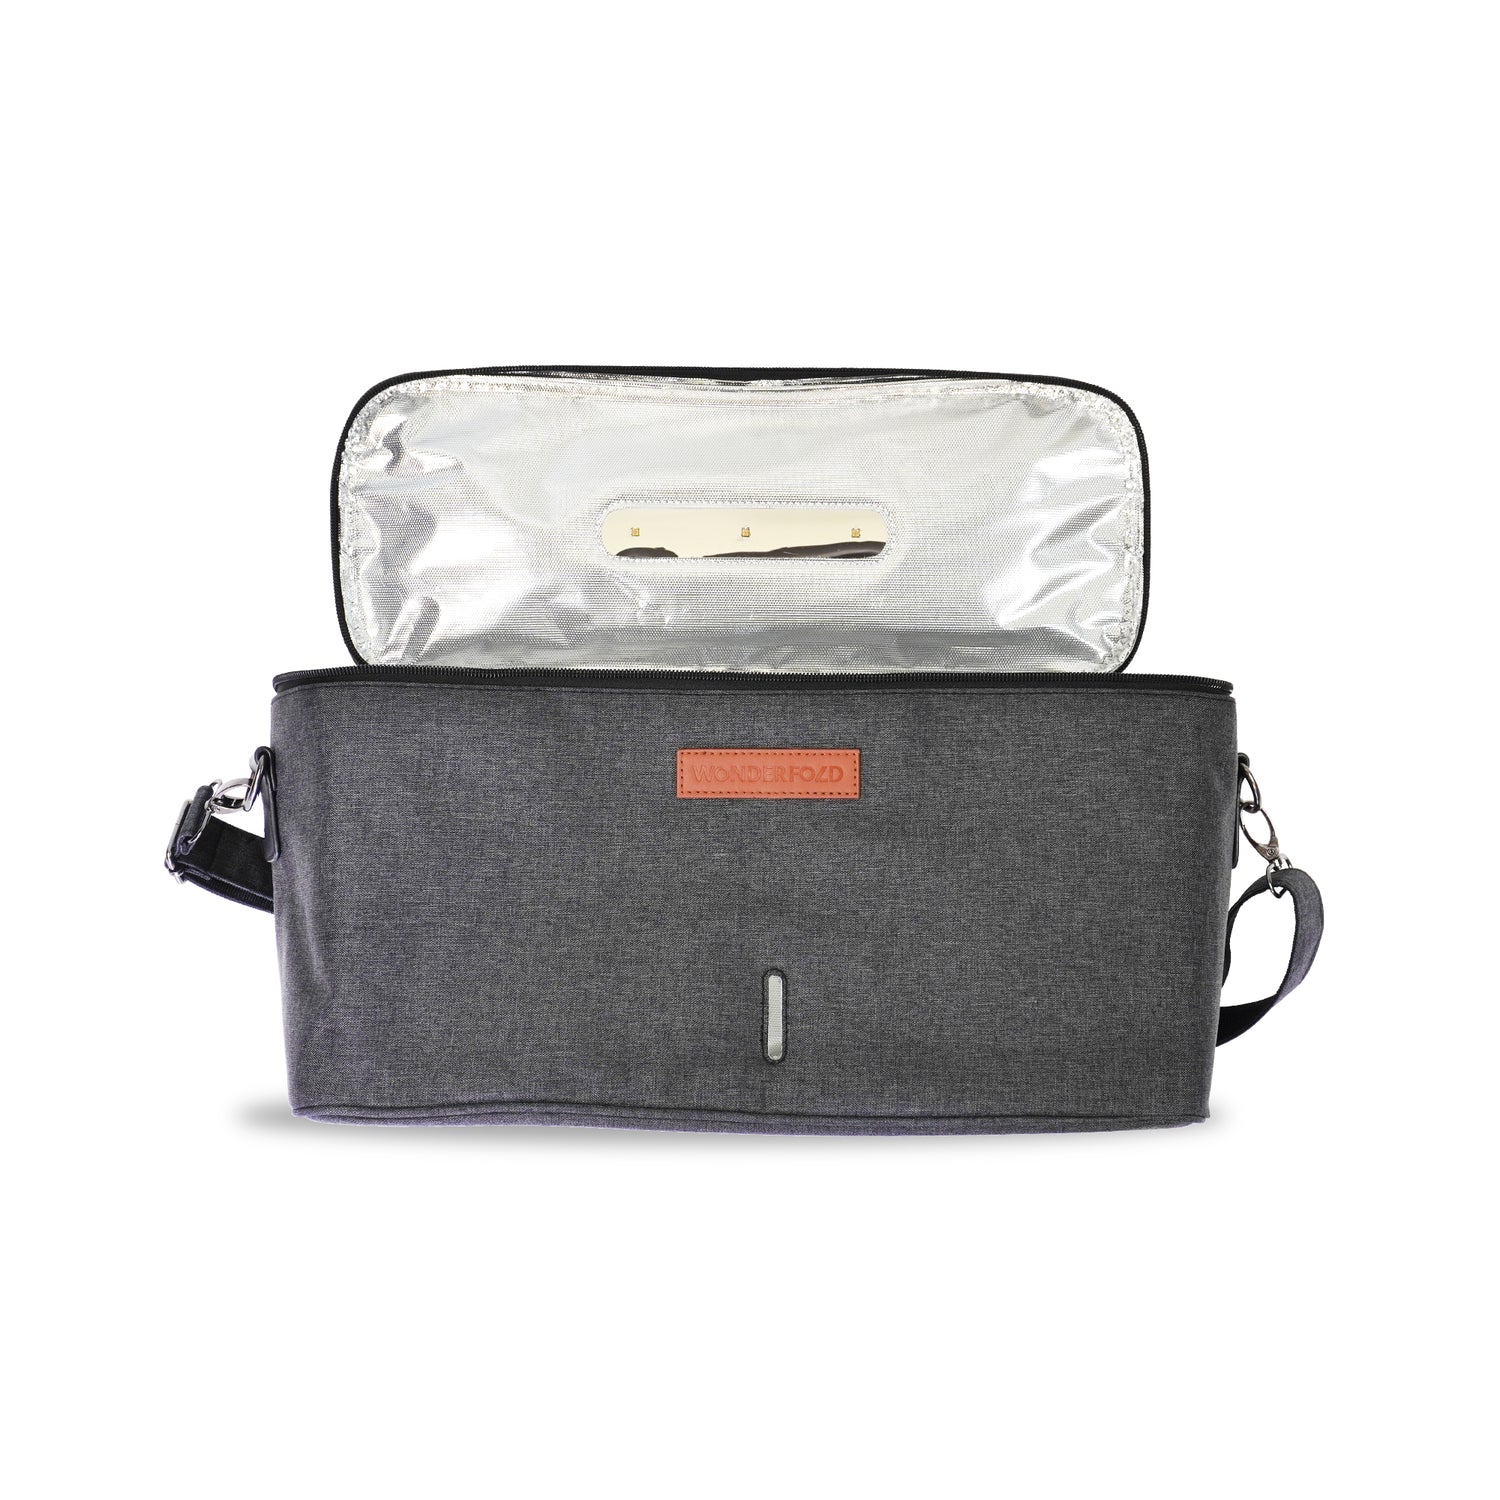 2-in-1 Cooler Bag with UV Light Sterilization - Open